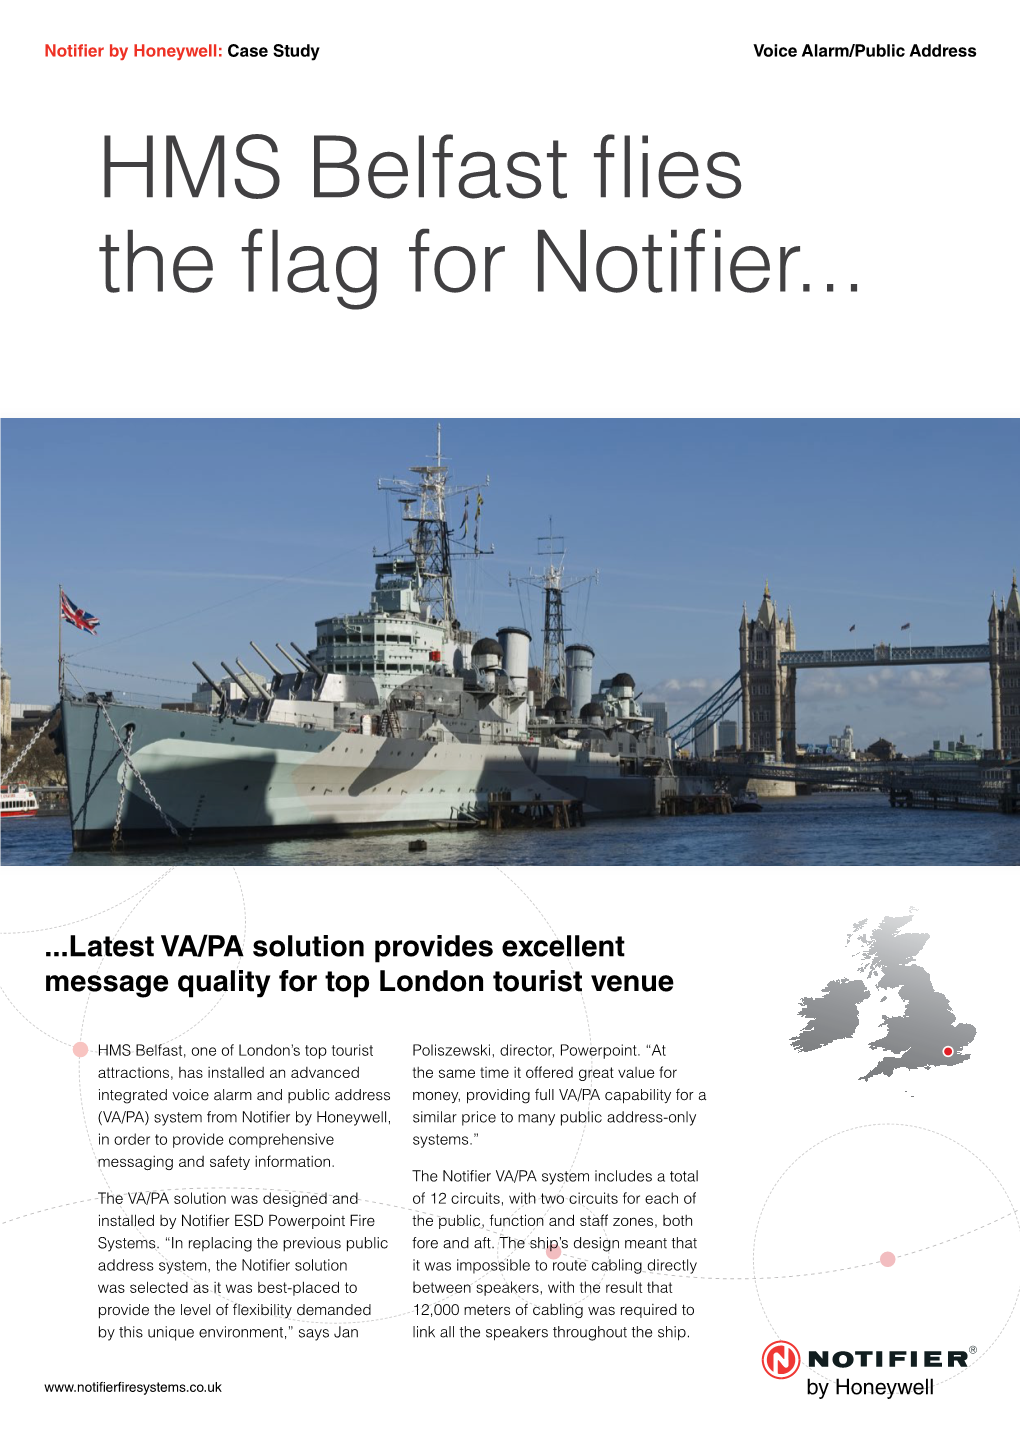 HMS Belfast Flies the Flag for Notifier